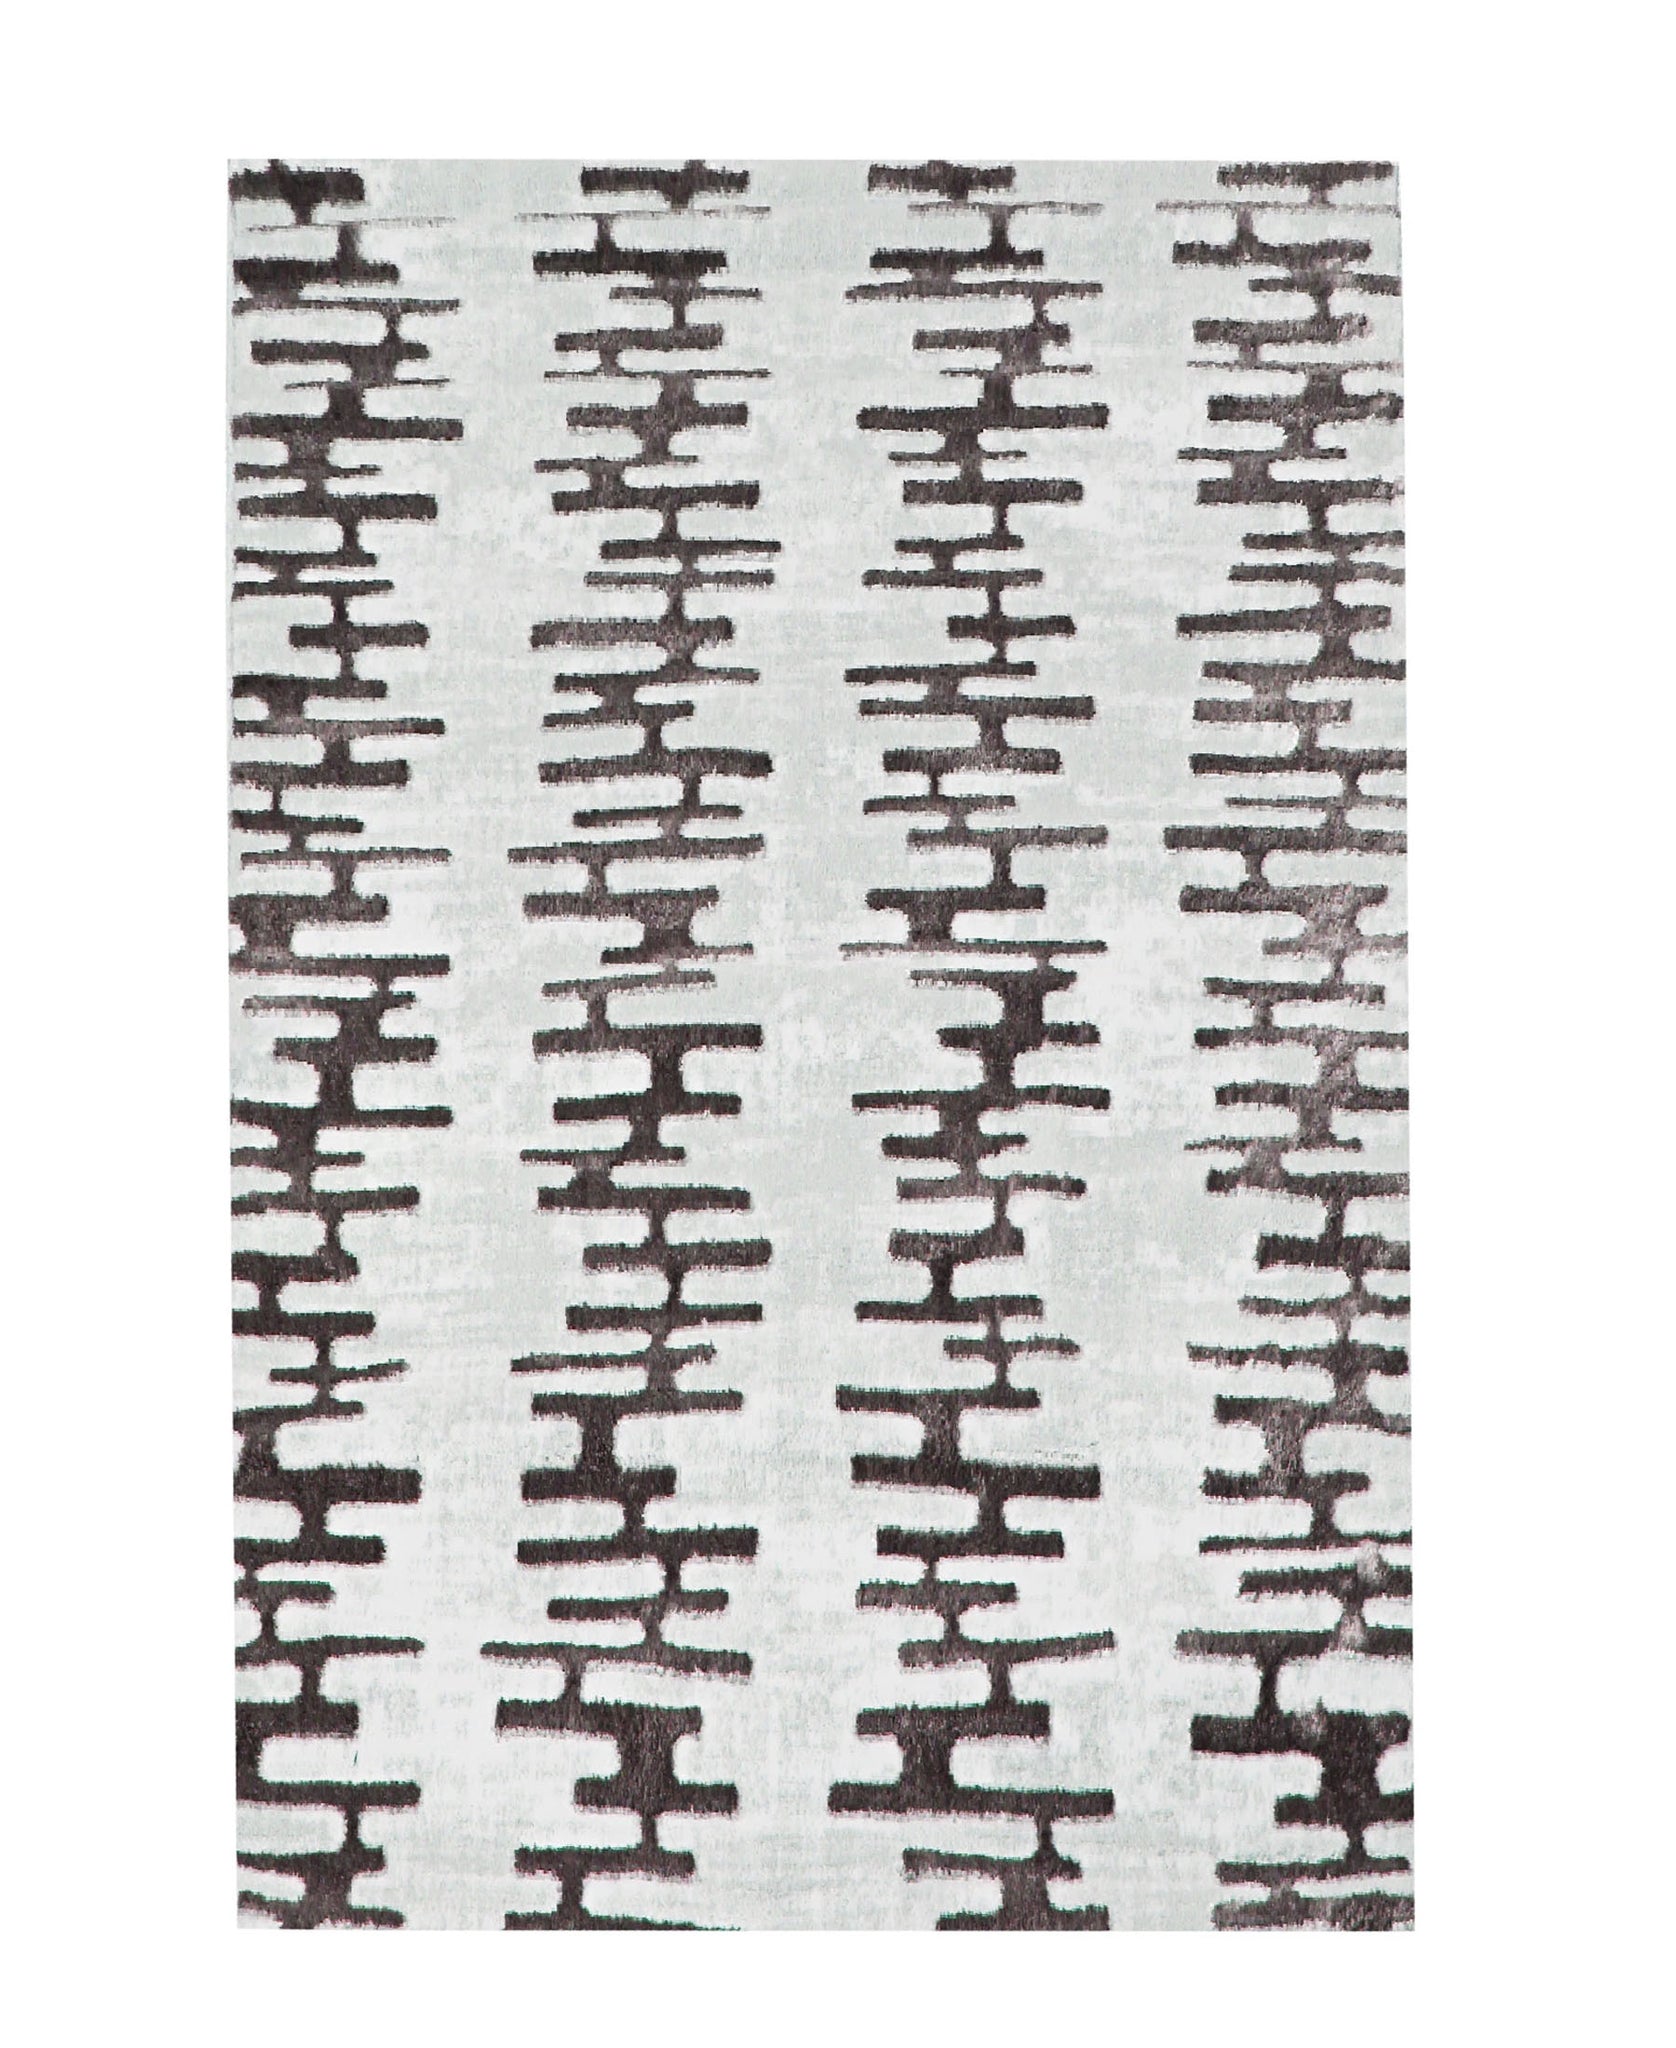 Konya Jagged Carpet 1500mm X 2200mm - Brown